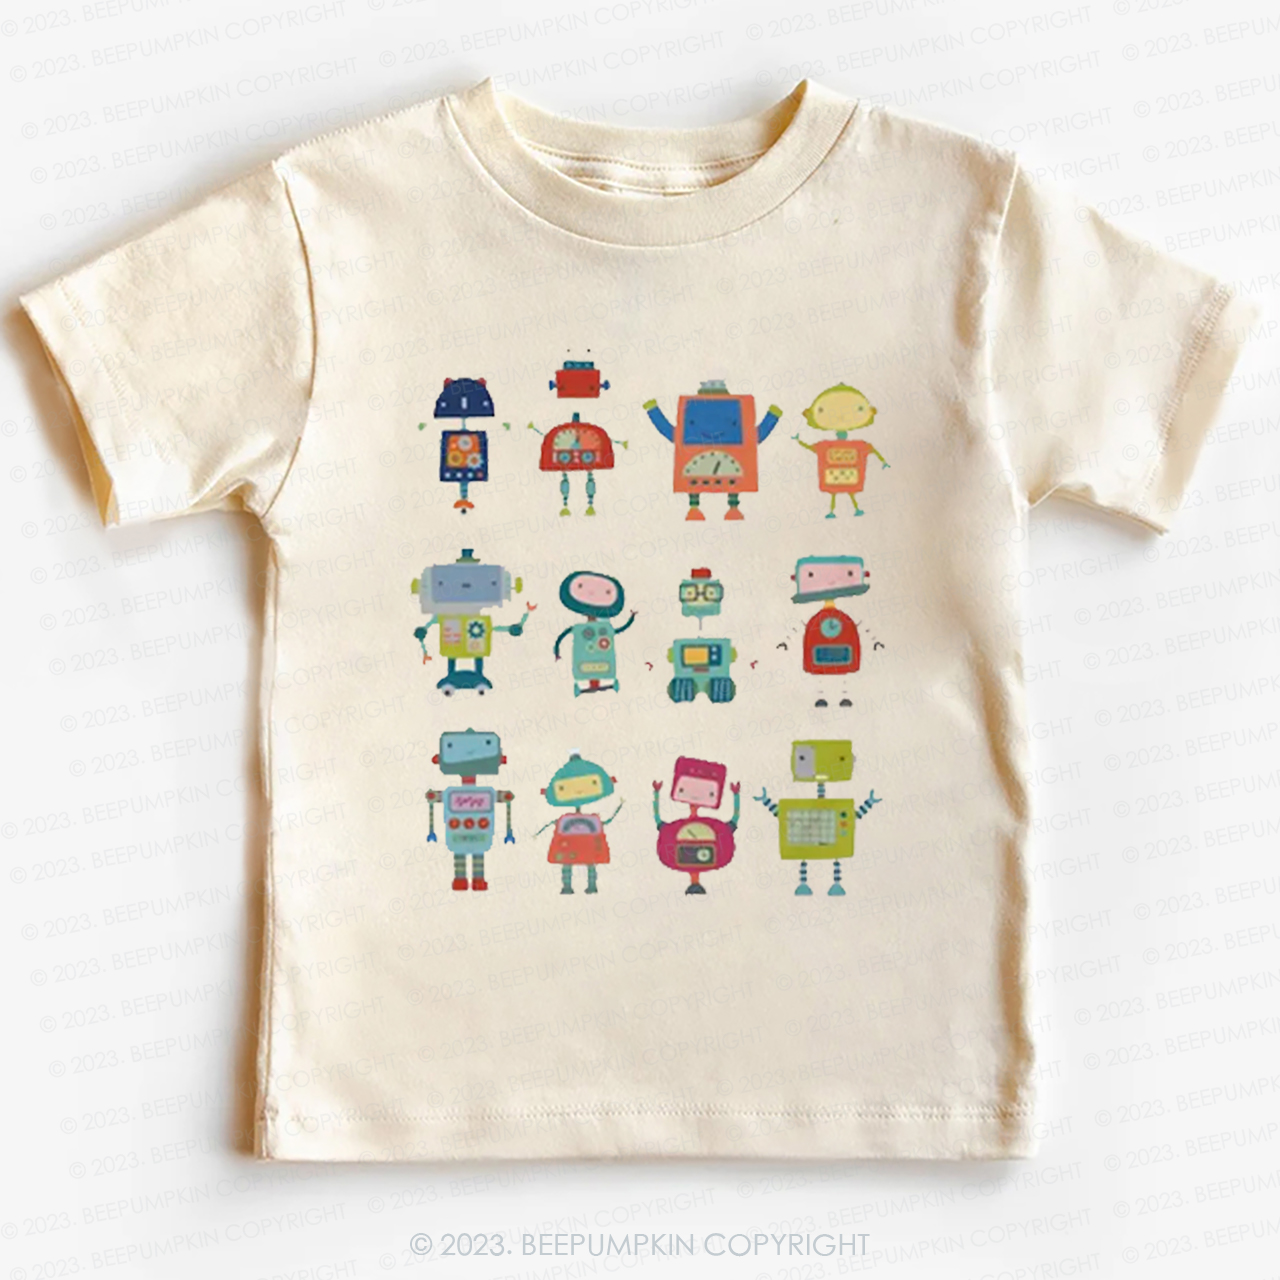  Fun Robot Crew Kids Shirt